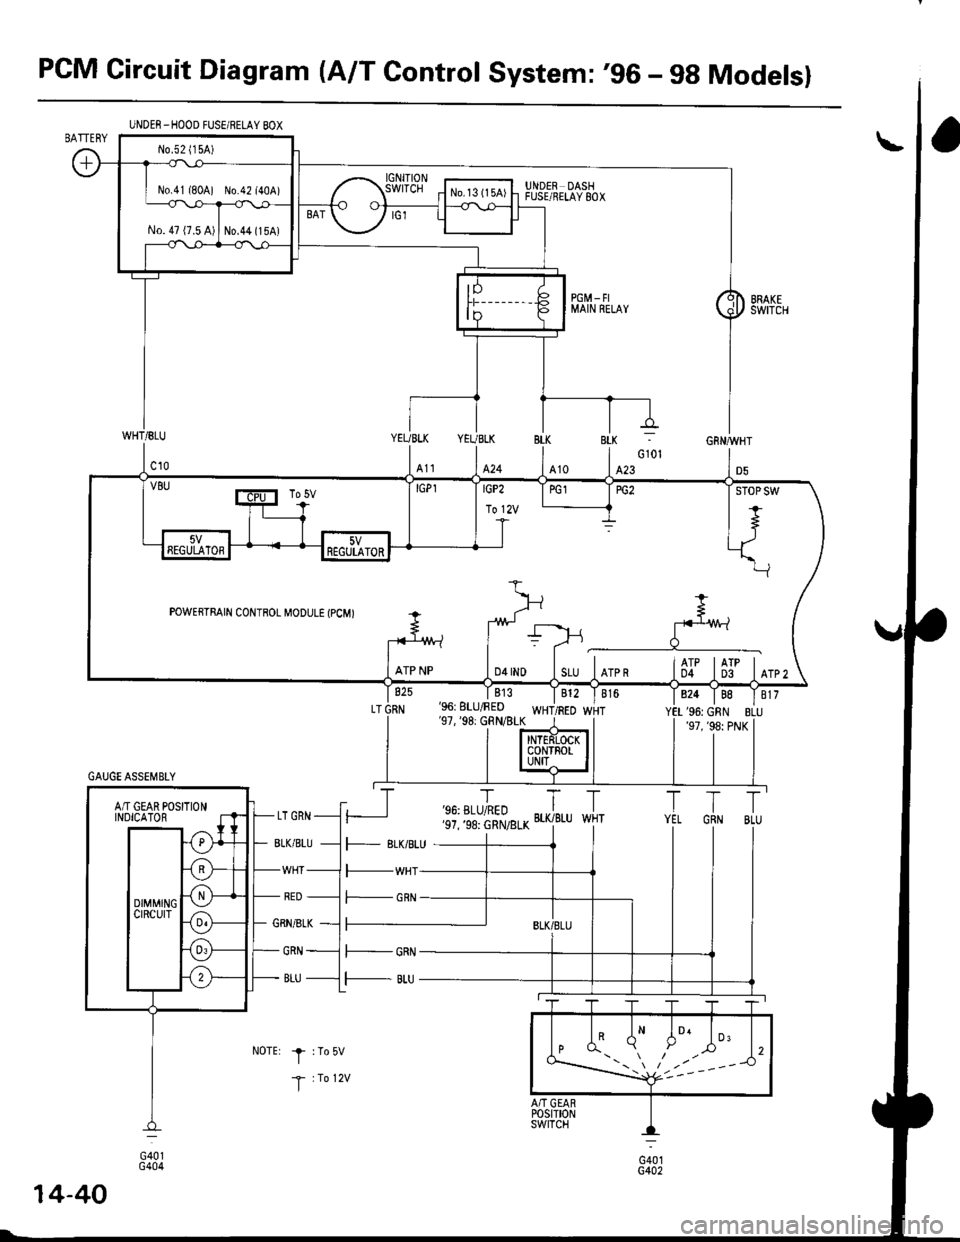 HONDA CIVIC 1997 6.G User Guide PGM Gircuit Diagram (A/T Control System: 96 - 98 Modelsl
UNDEfl -HOOD FUSE/RELAY BOX
No.41 (80A1 N0.42 l40A)
No.47 {7.5 A)
No.l3 (15A)
Arp Np lon,^o l r,, lotrr l 6lt l 3]t lot*
UNDER DASHFUSE/REIAY 